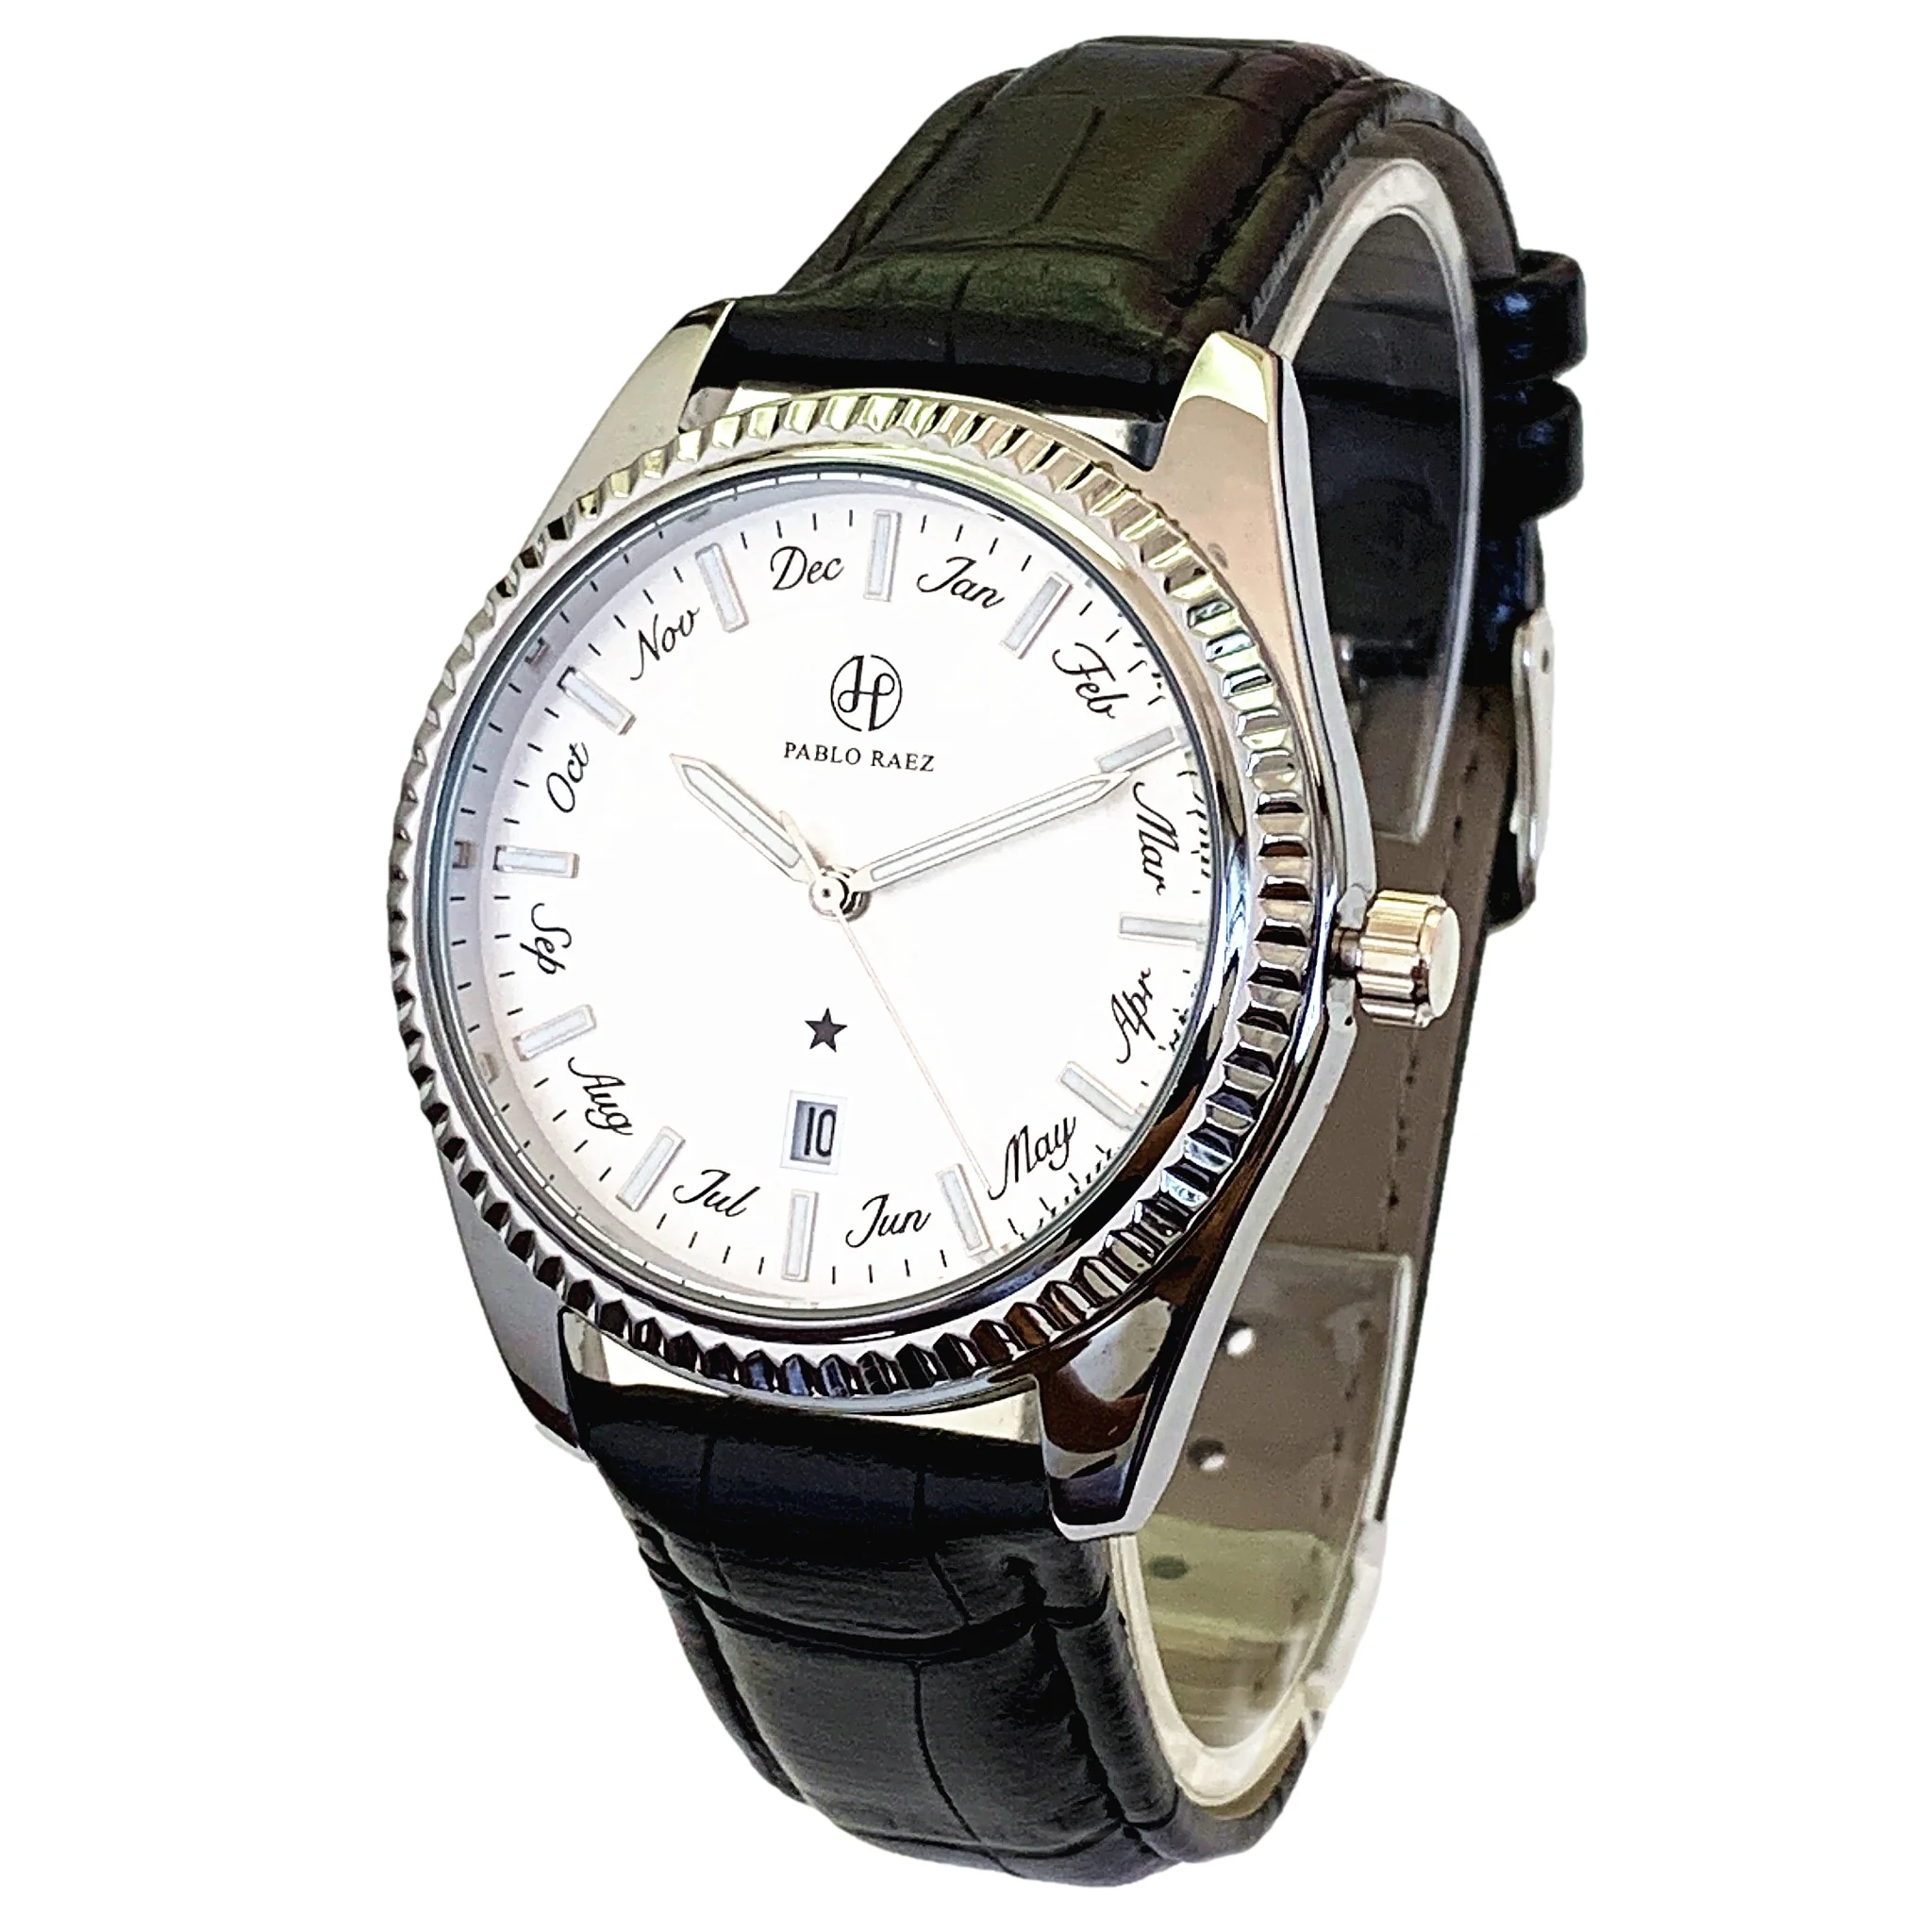 

PABLO RAEZ Newest Top Brand Popular Man Calendar Watch Luxury Month Leather Business Male Casual Wristwatch Fashion Quartz Clock